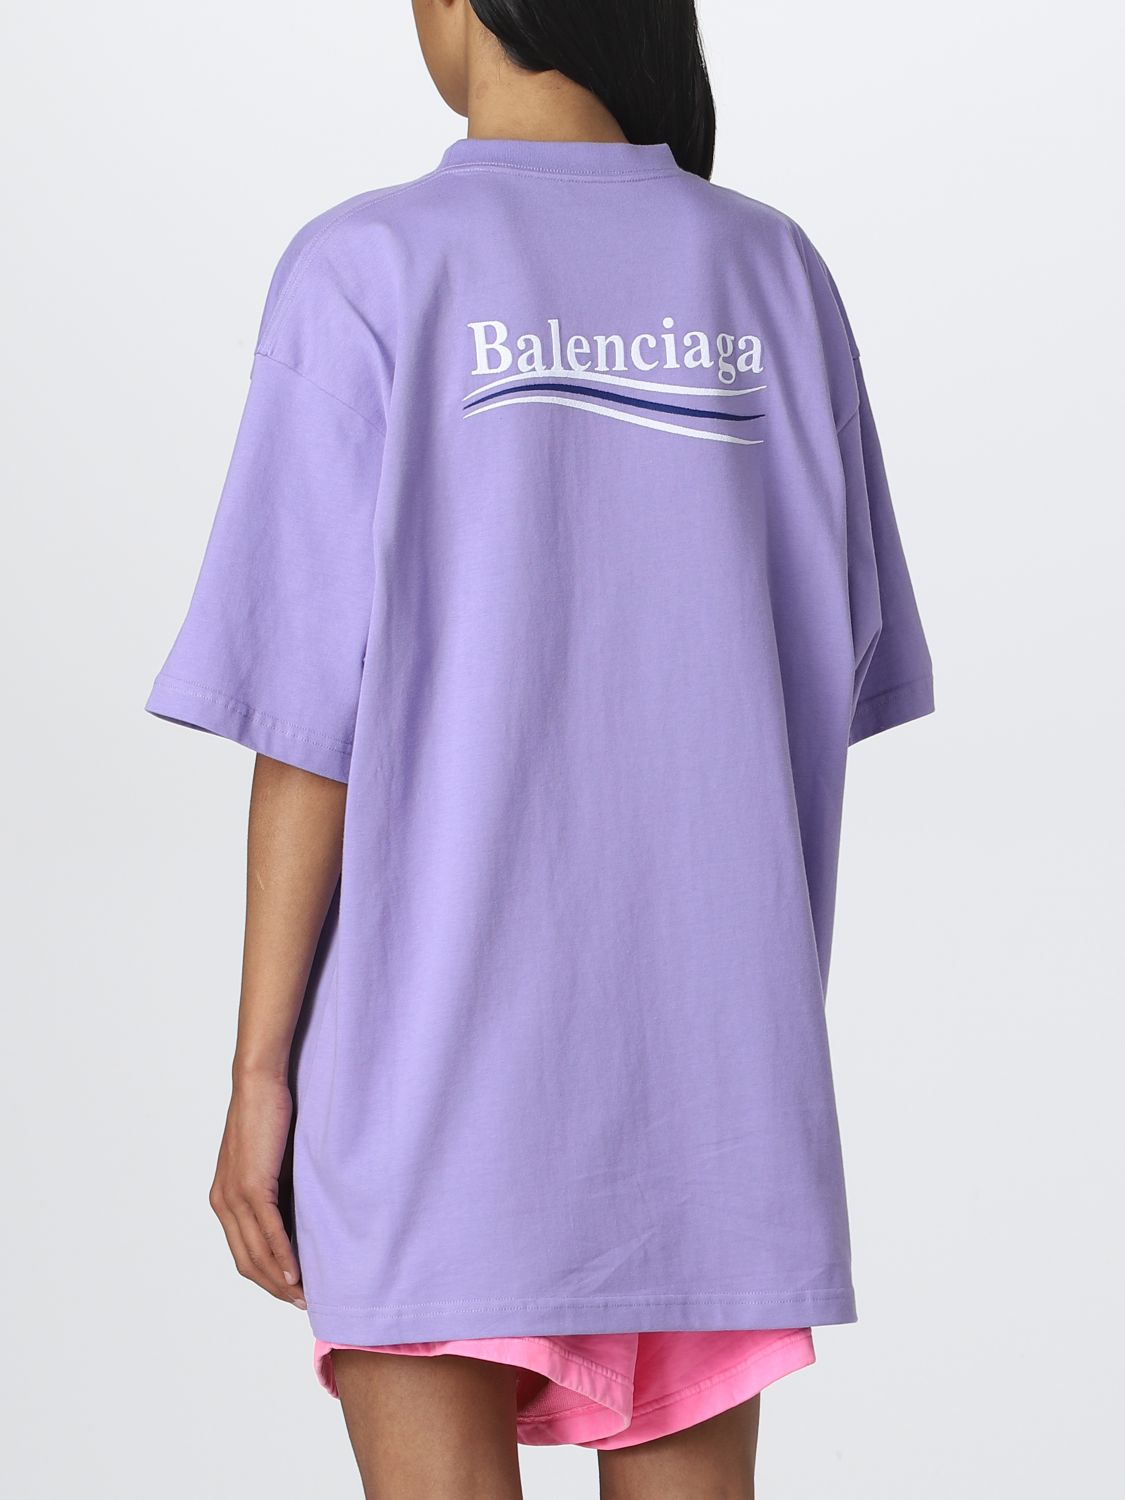 Kortfattet kanal elefant BALENCIAGA: cotton t-shirt - Lilac | Balenciaga t-shirt 641655 TKVJ1 online  at GIGLIO.COM